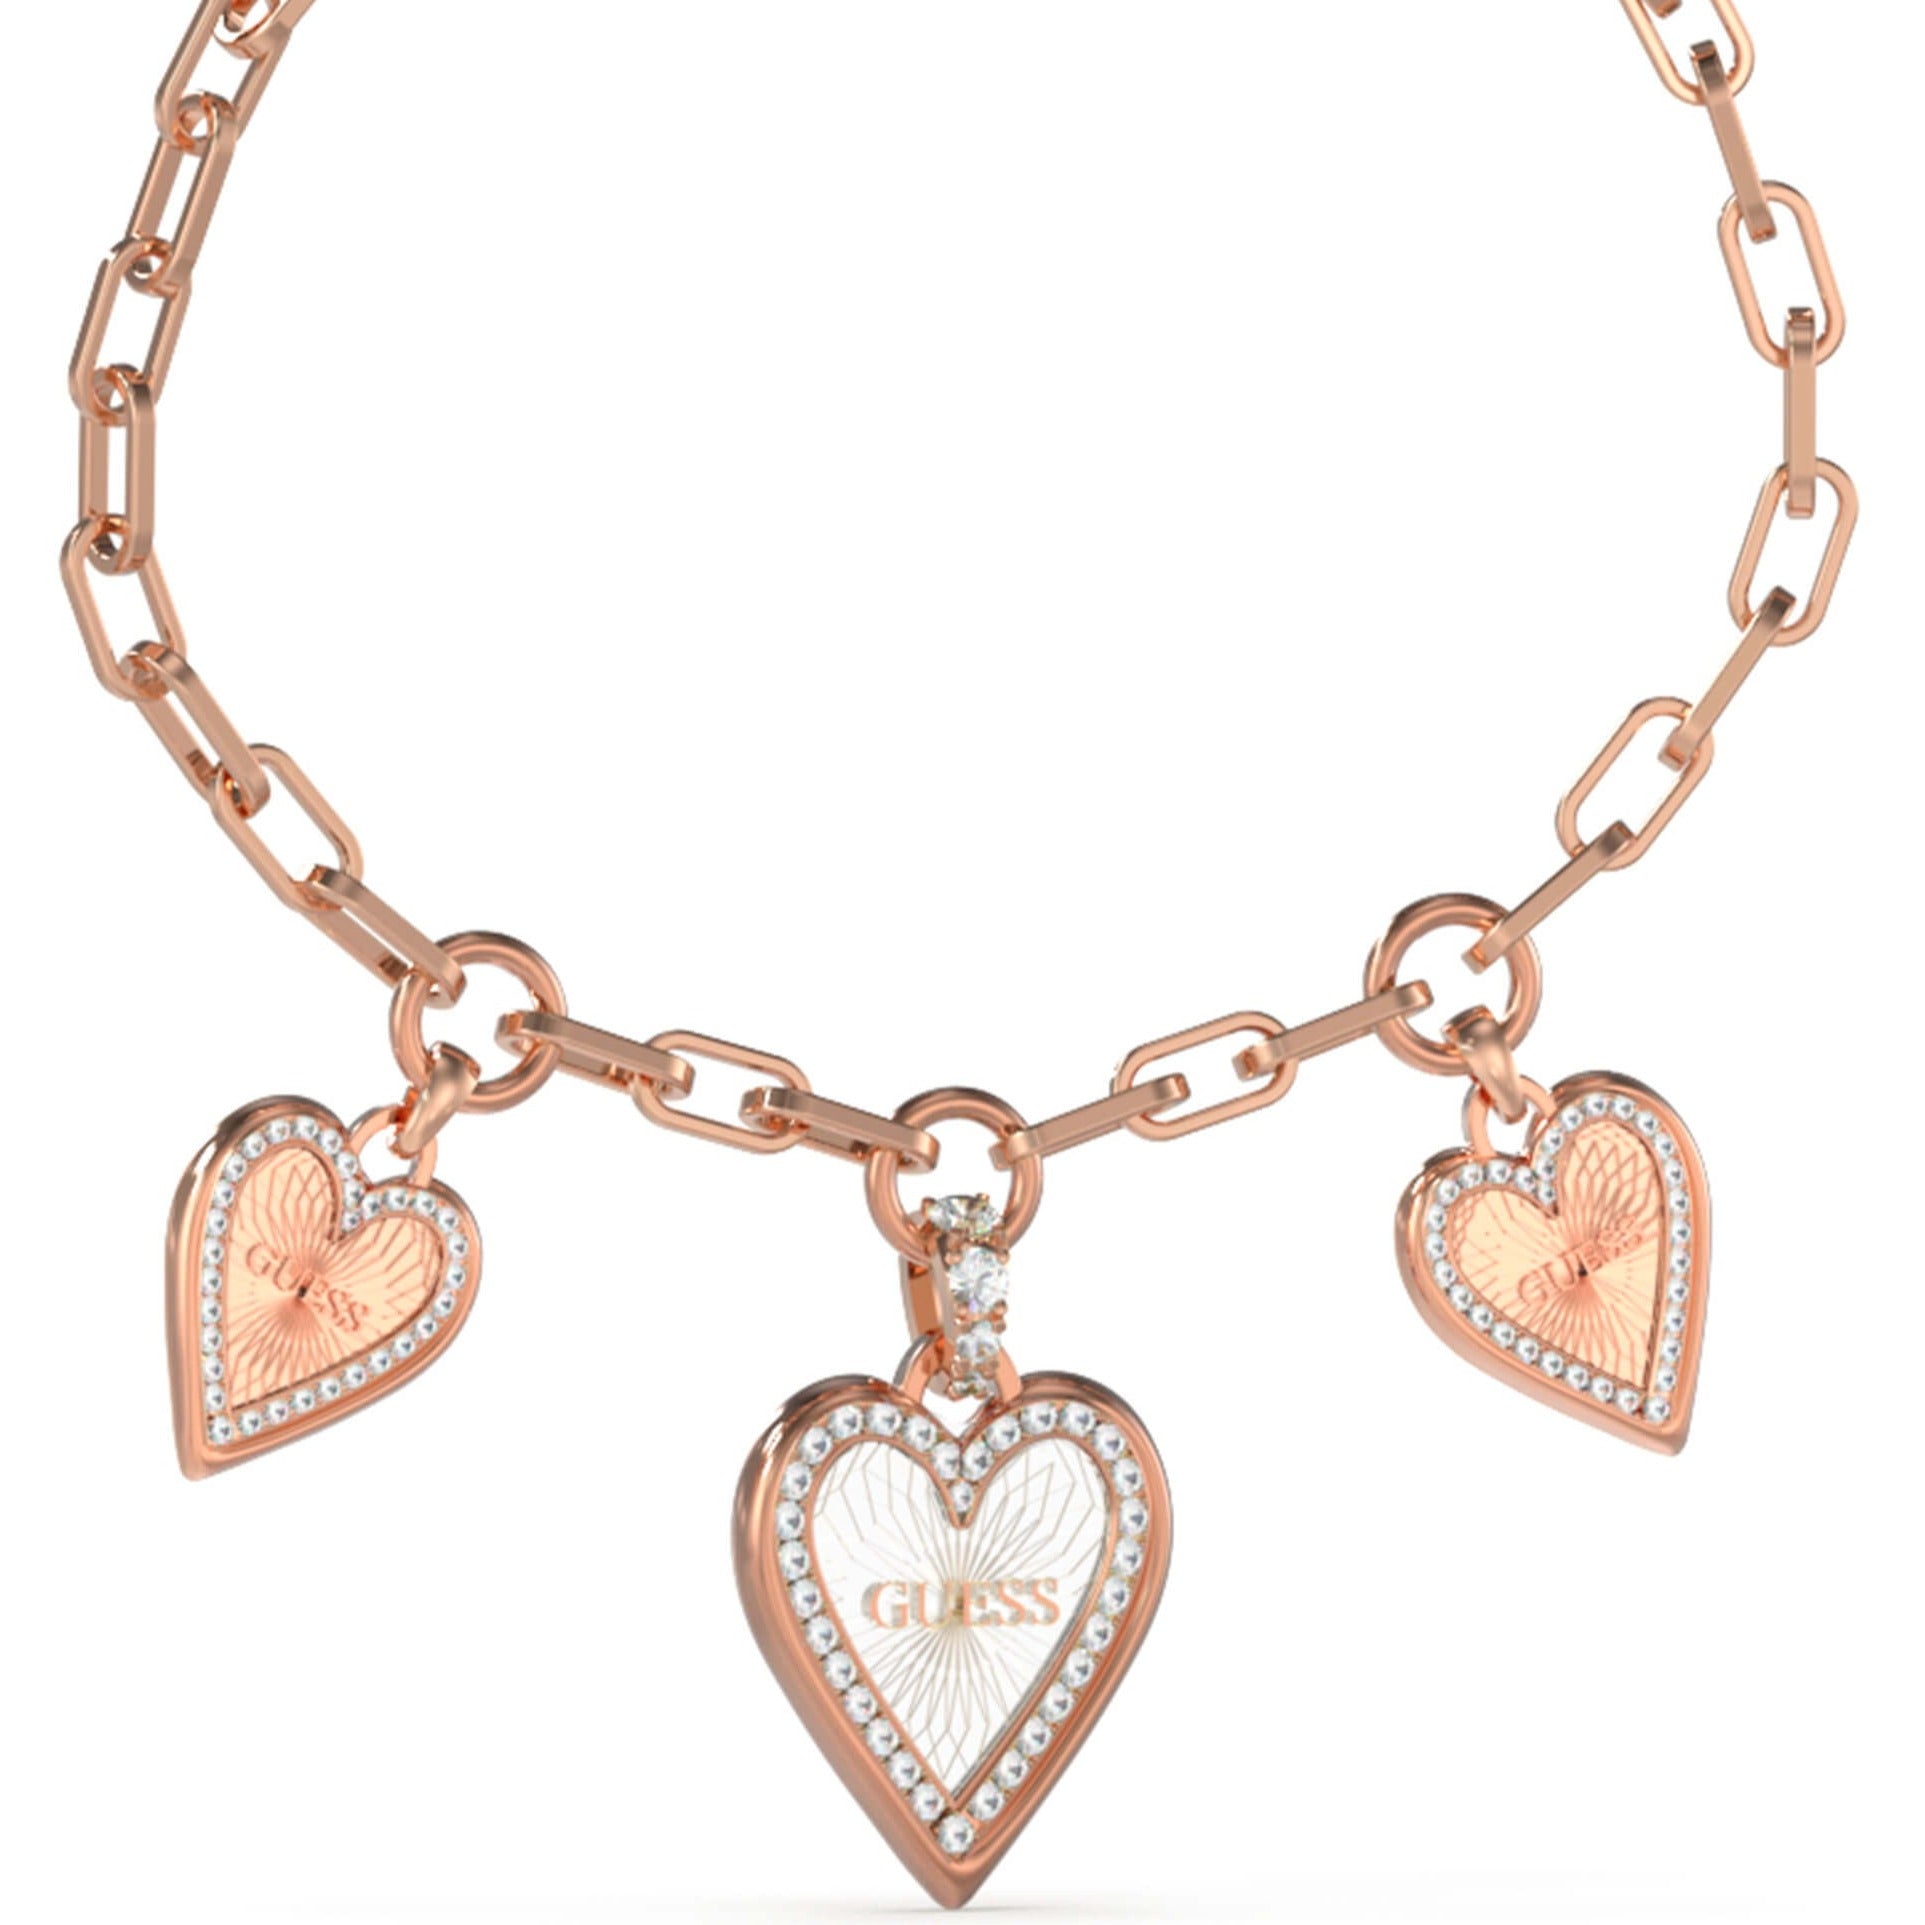 Guess | Jewelry | Guess Pearl Heart Charm Bracelet | Poshmark